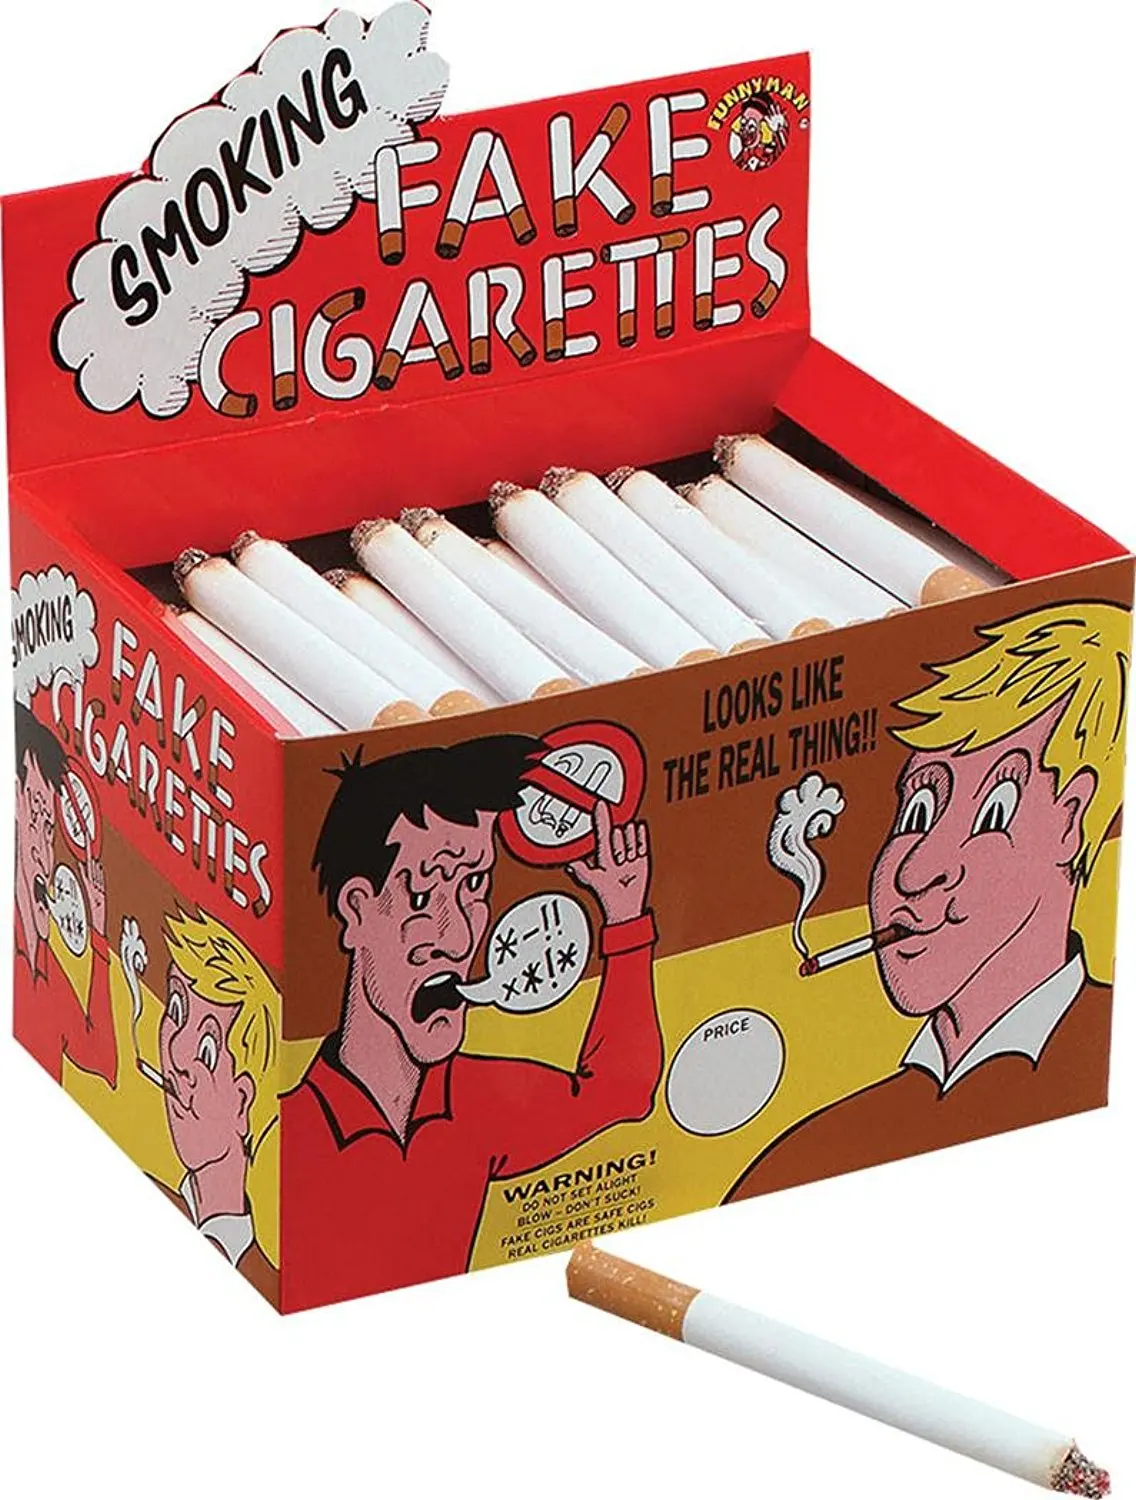 Fake Cigarettes That Puff Smoke